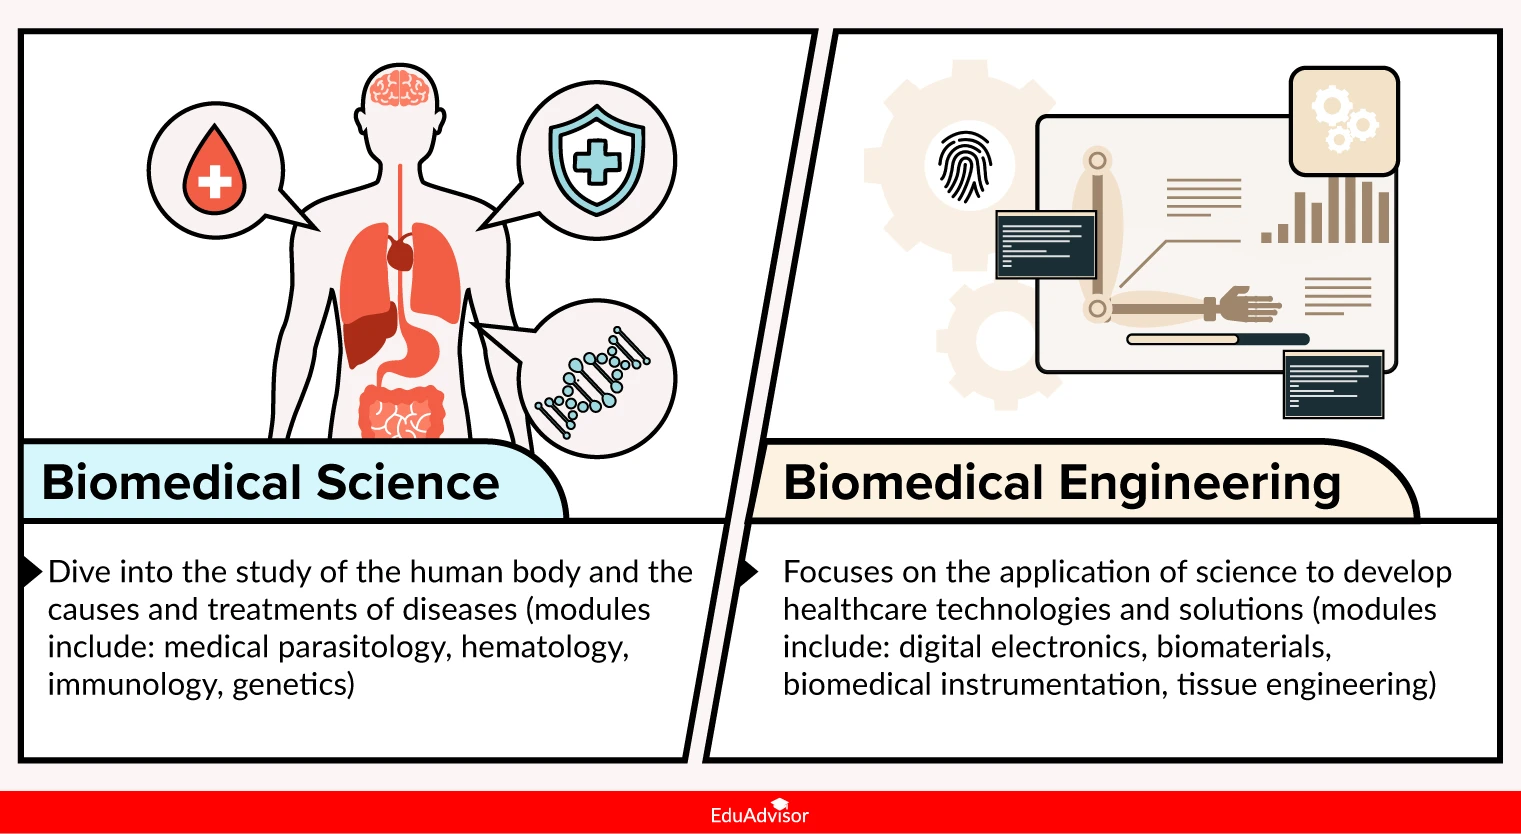 biomed-science-vs-biomed-engineering-subject